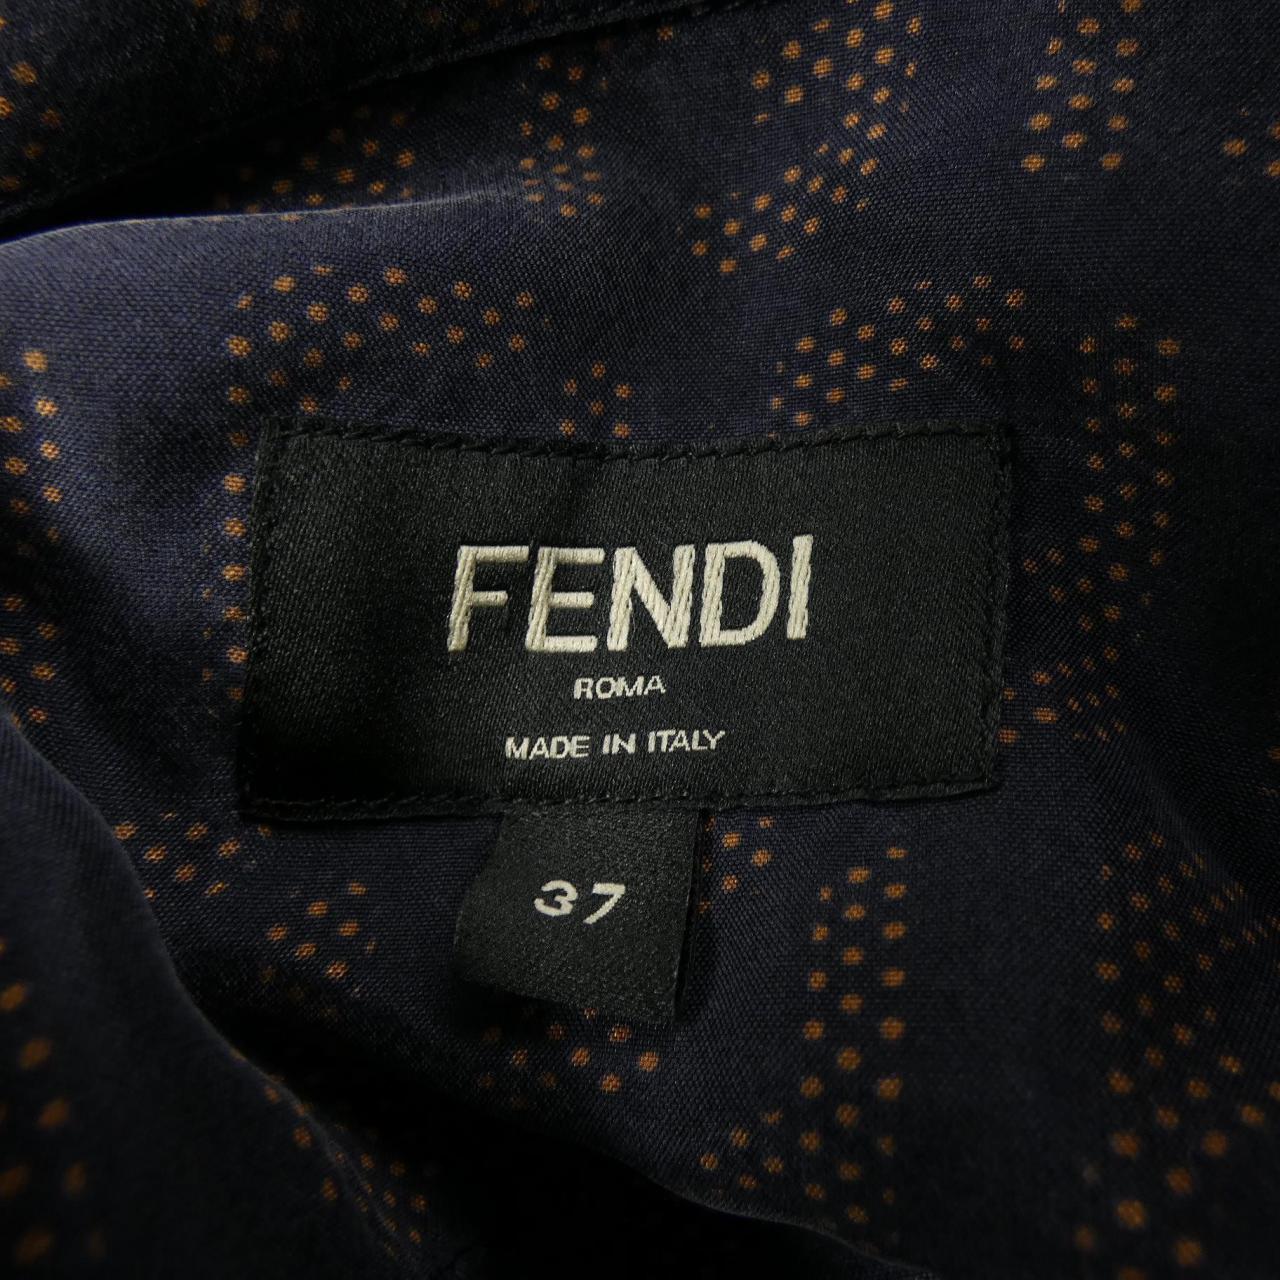 FENDI S/S shirt